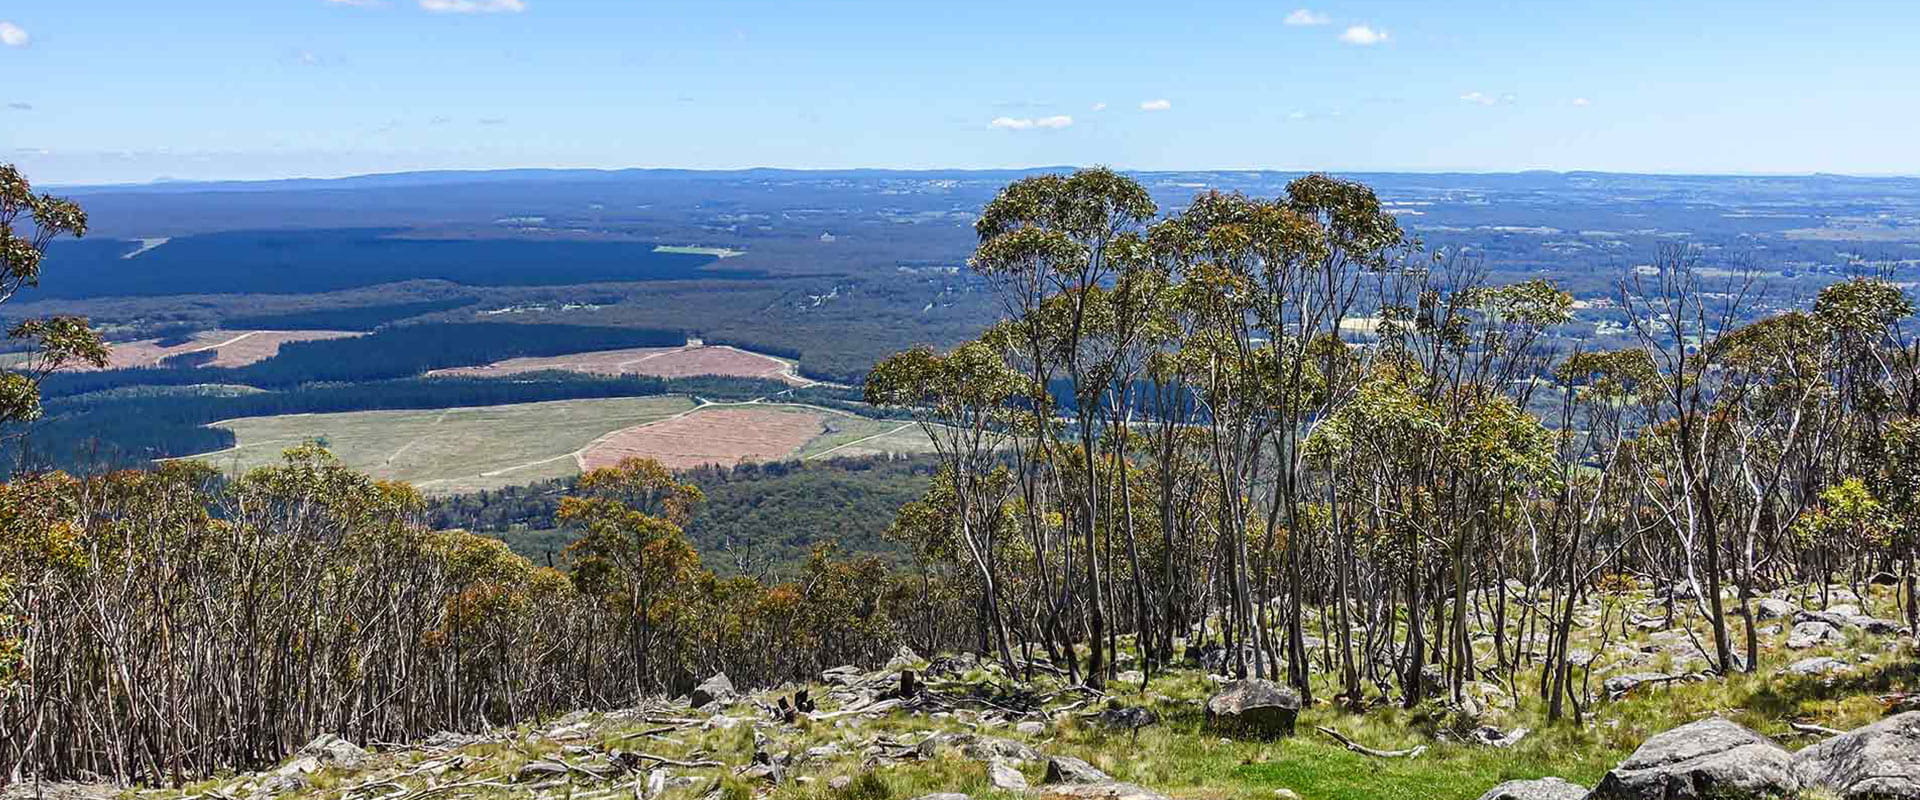 Summit views from a rugged bushland towards lush trees and farmland